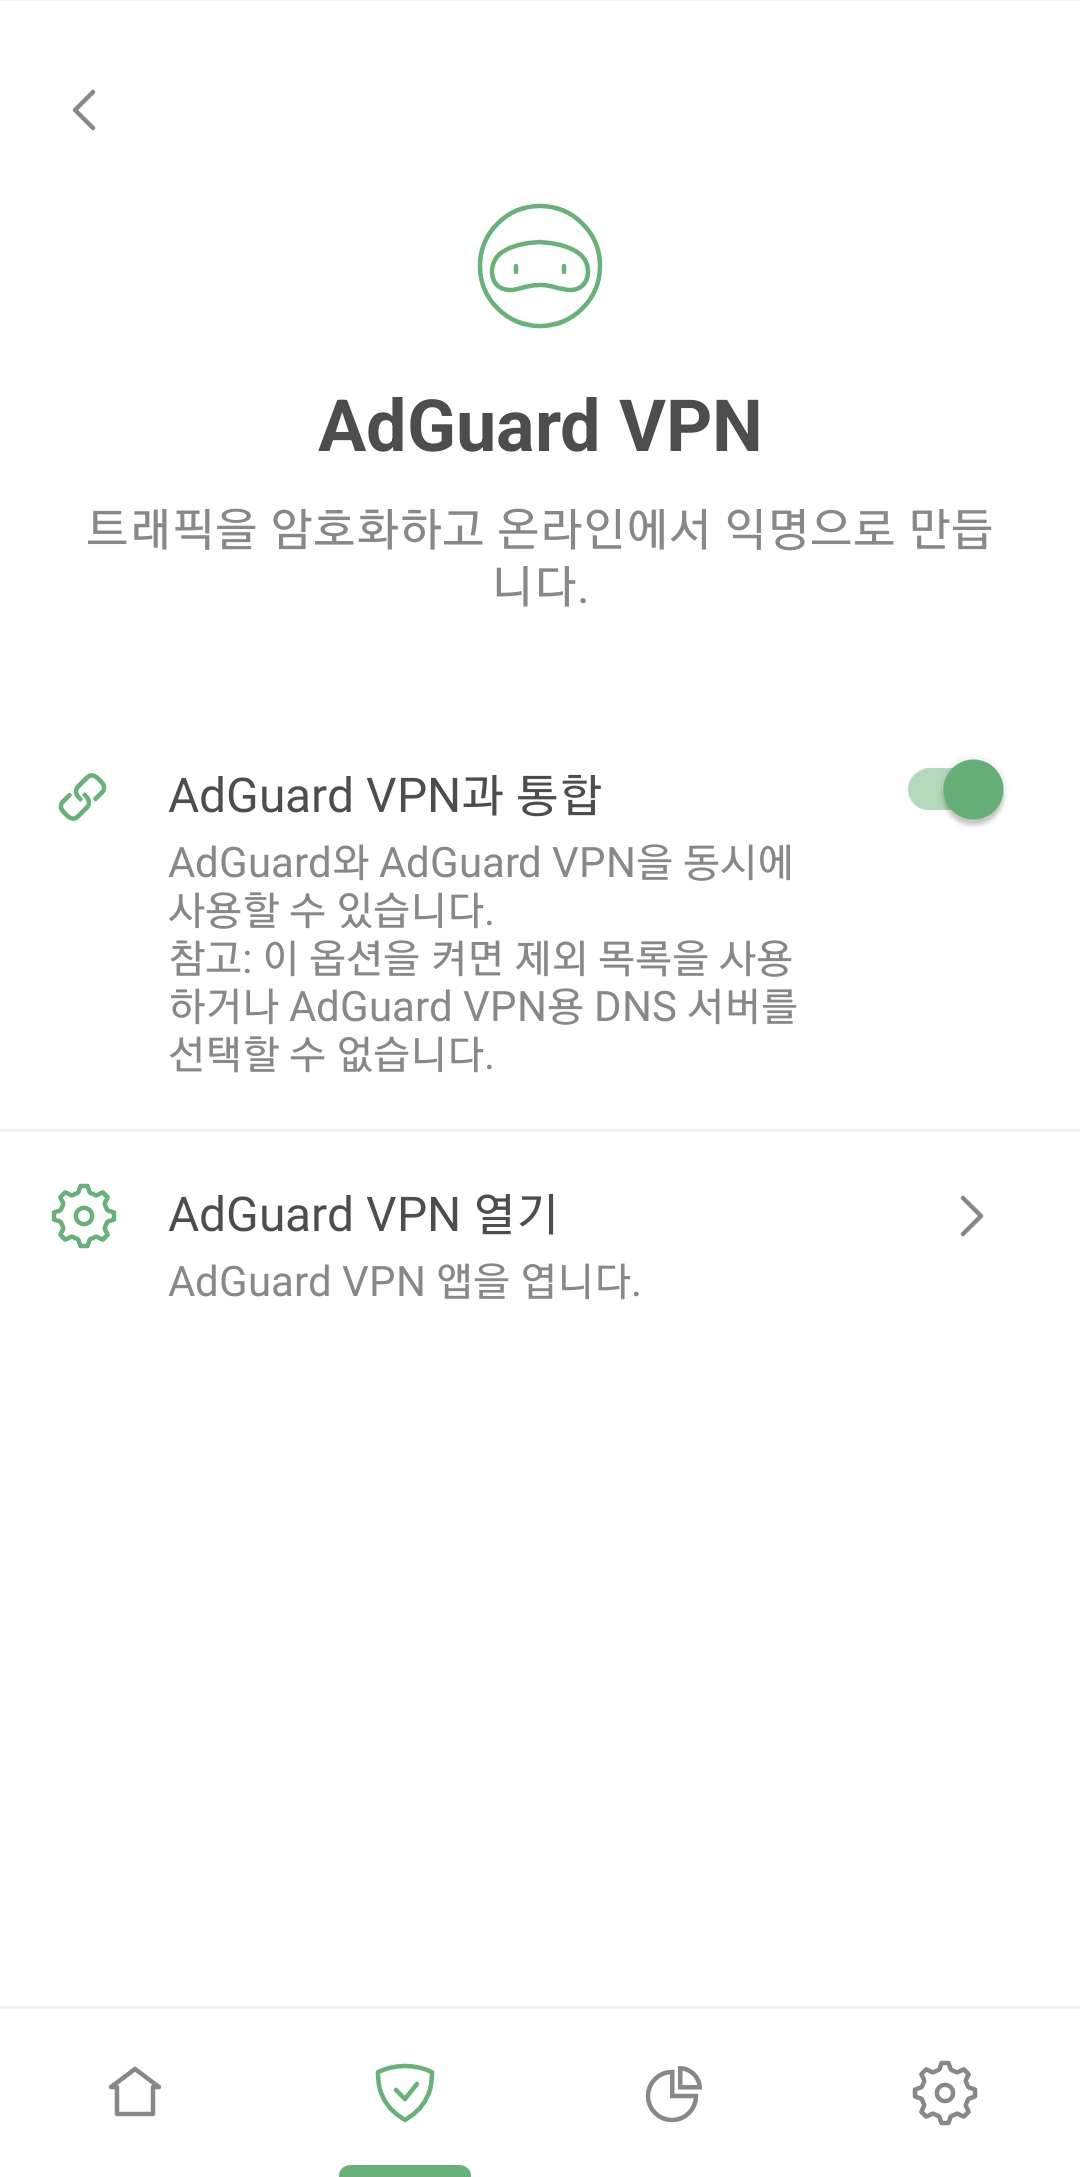 AdGuard VPN과 통합 *mobile_border